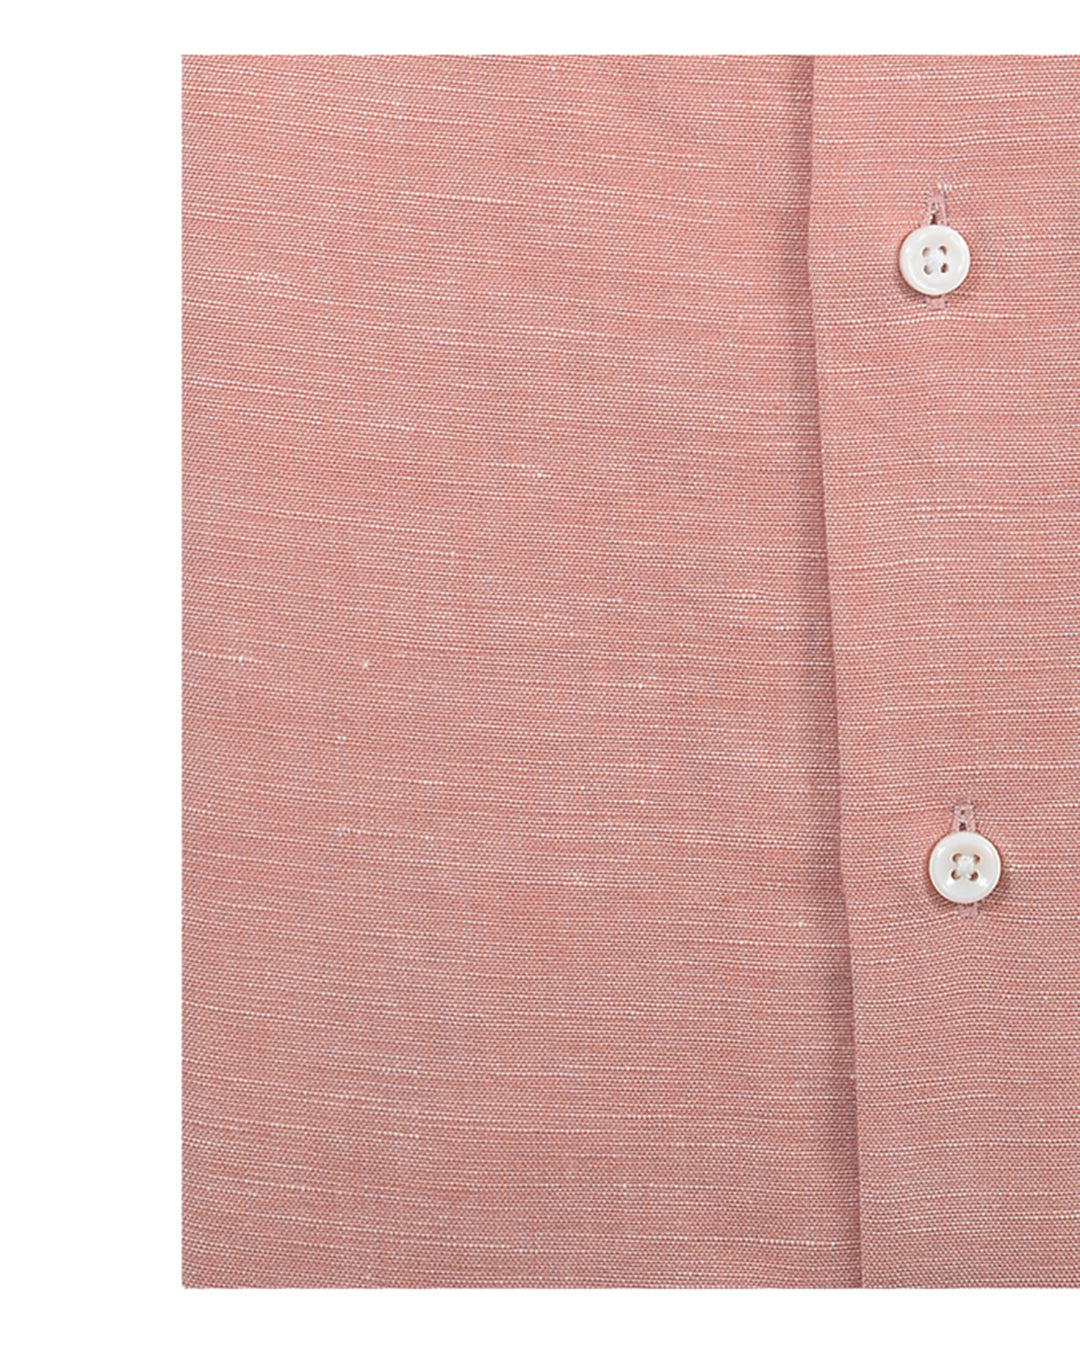 Cotton Linen: Plain Red Chambray